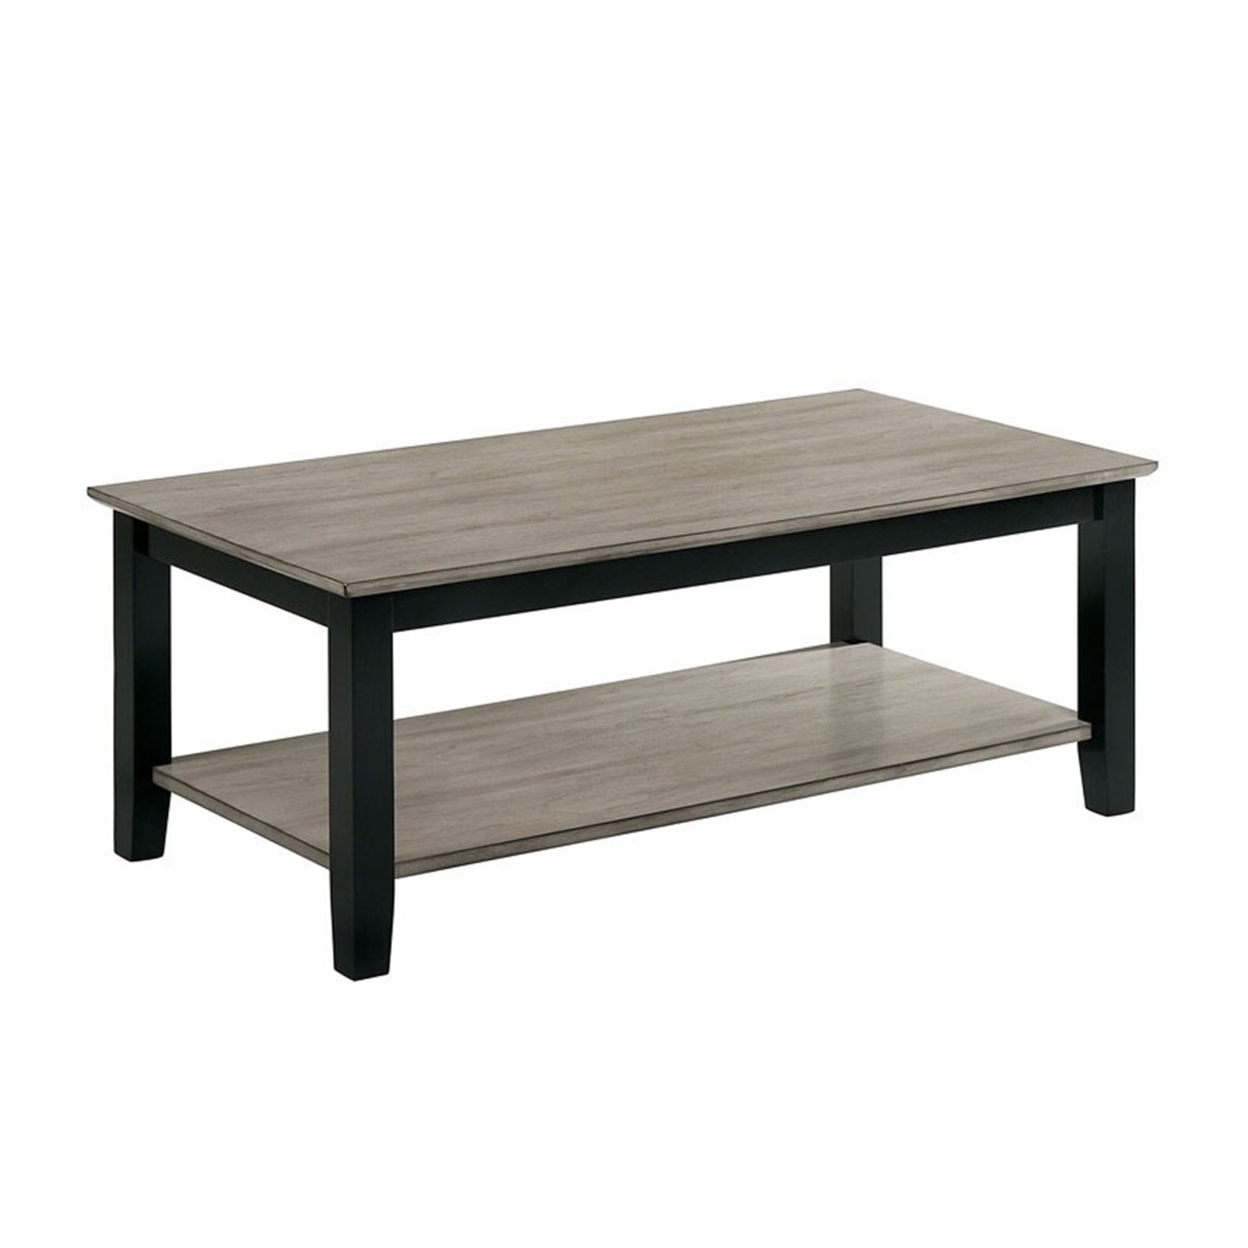 47 Inch Modern Rectangular Coffee Table, Single Shelf, Wood Grain, Gray